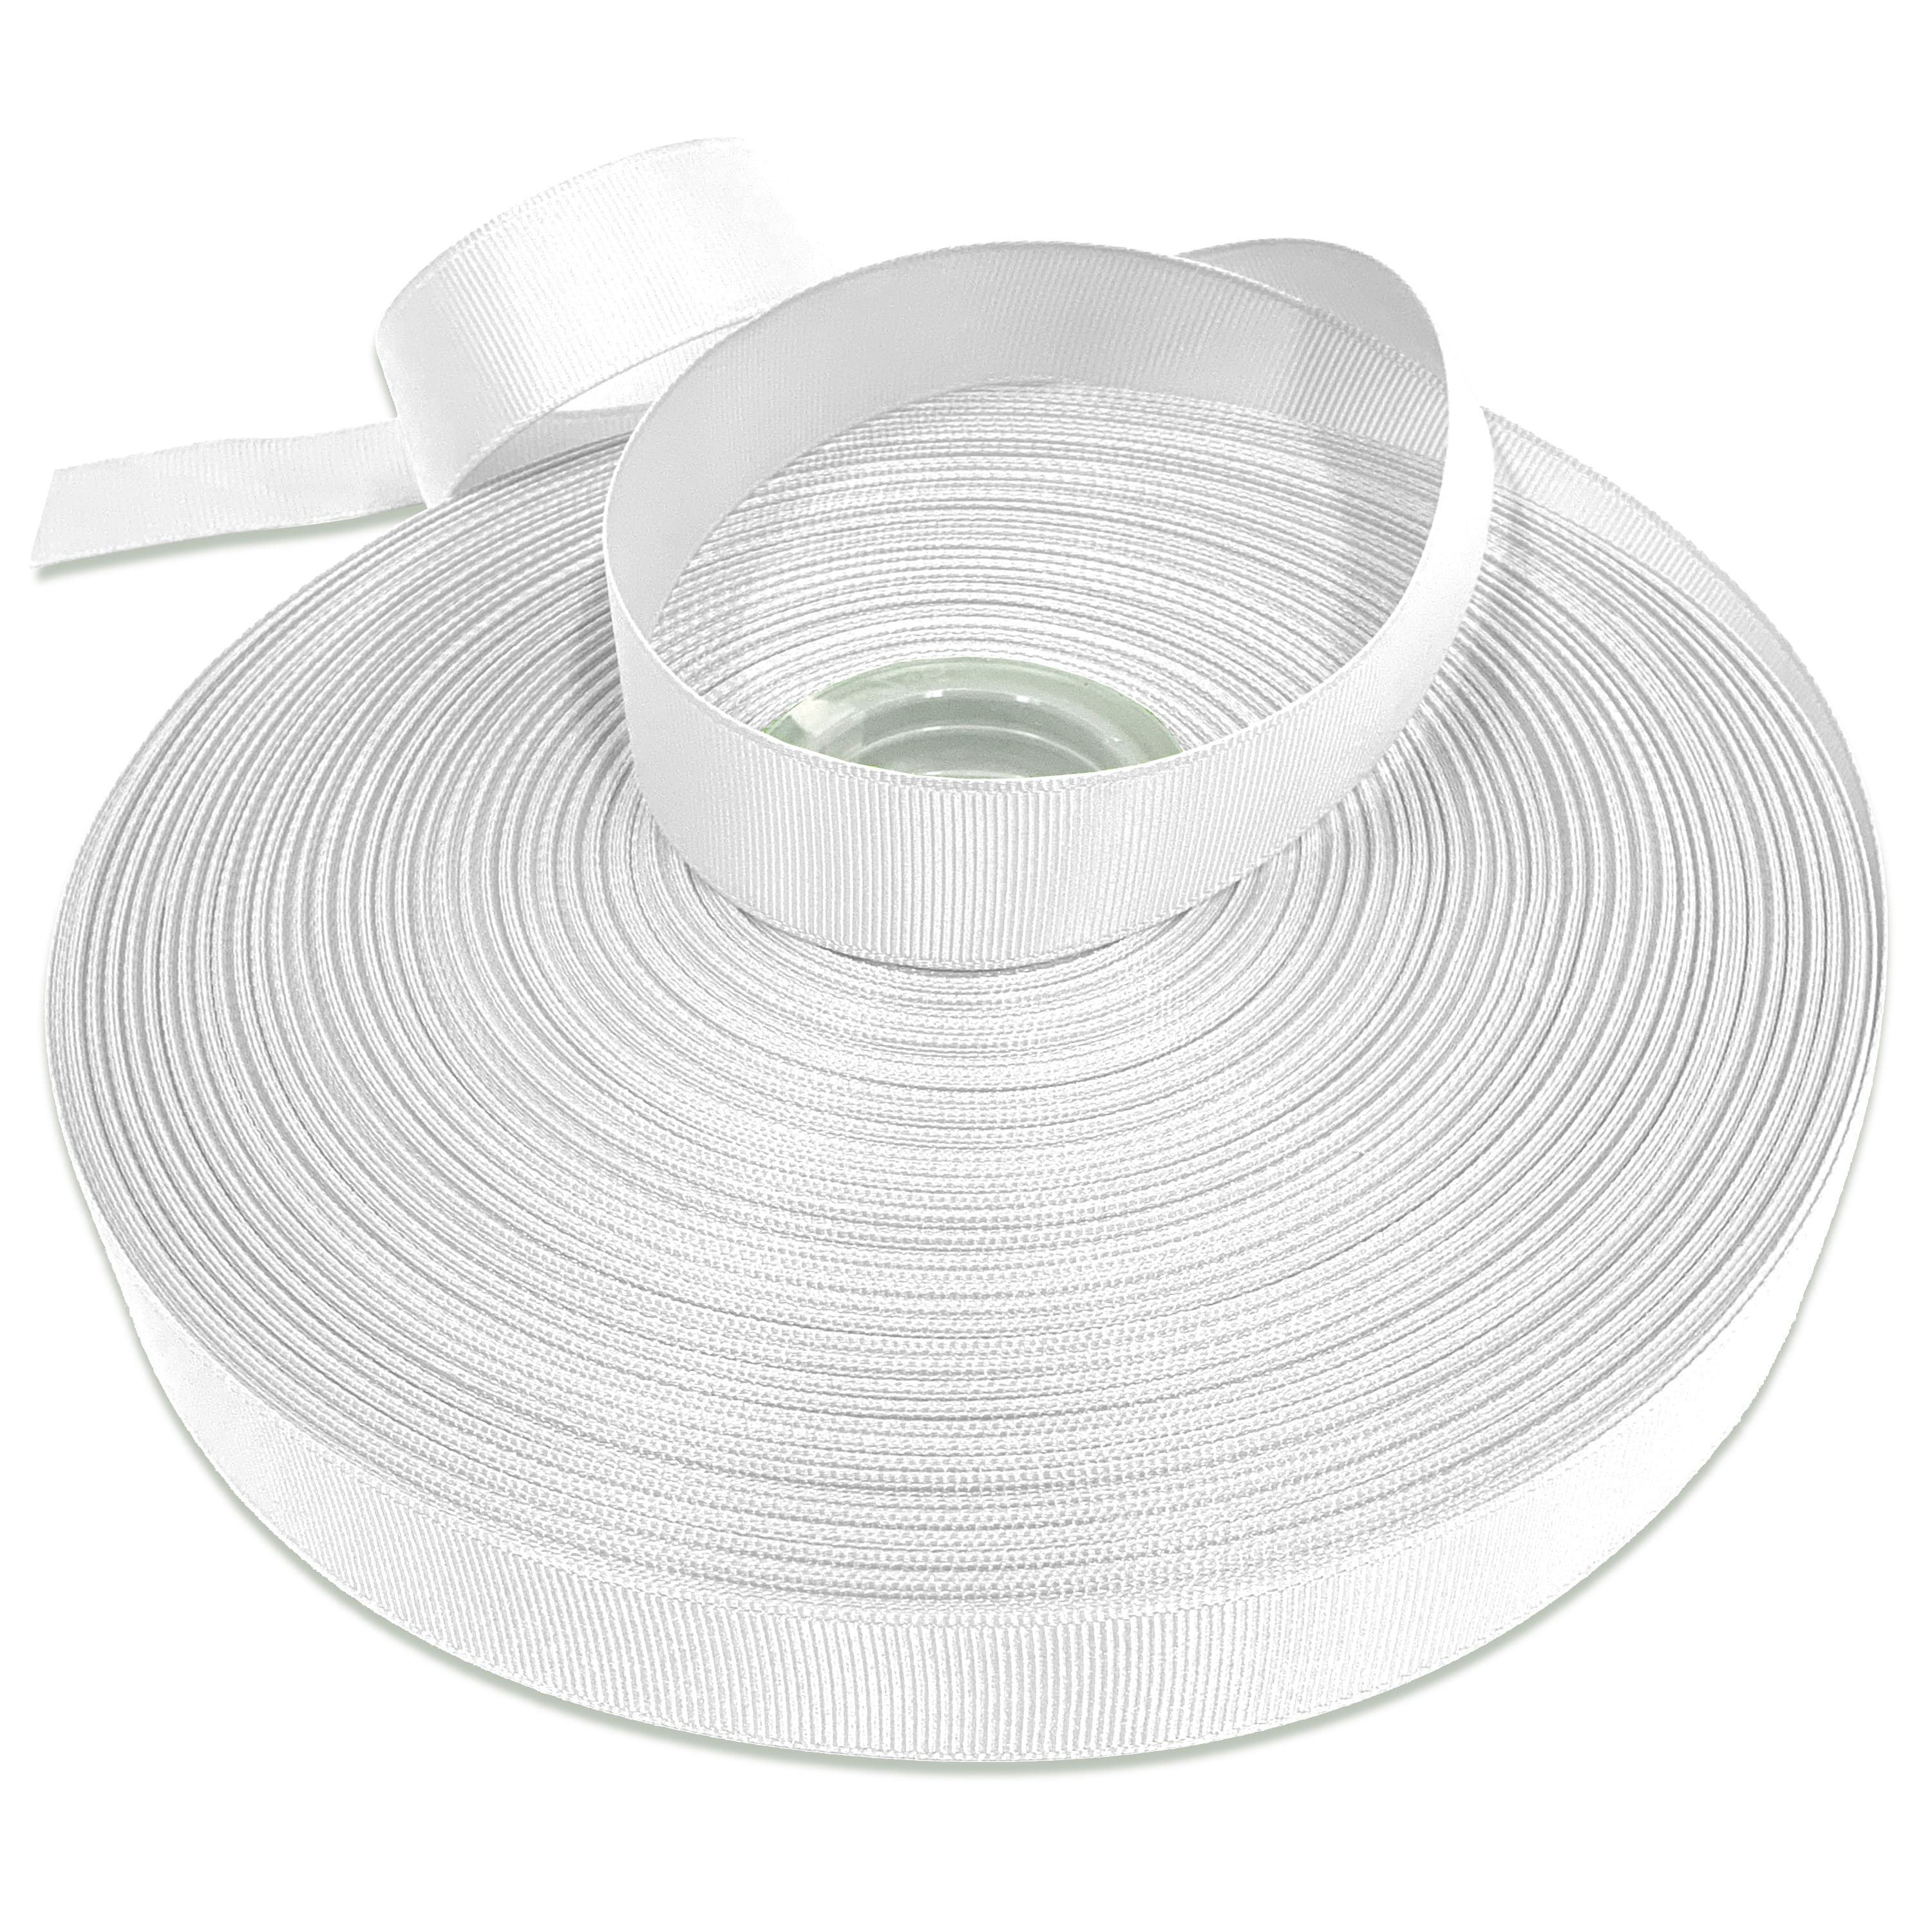 Gwen Studios Solid Grosgrain Ribbon in White | 2.5 x 50yd | Michaels